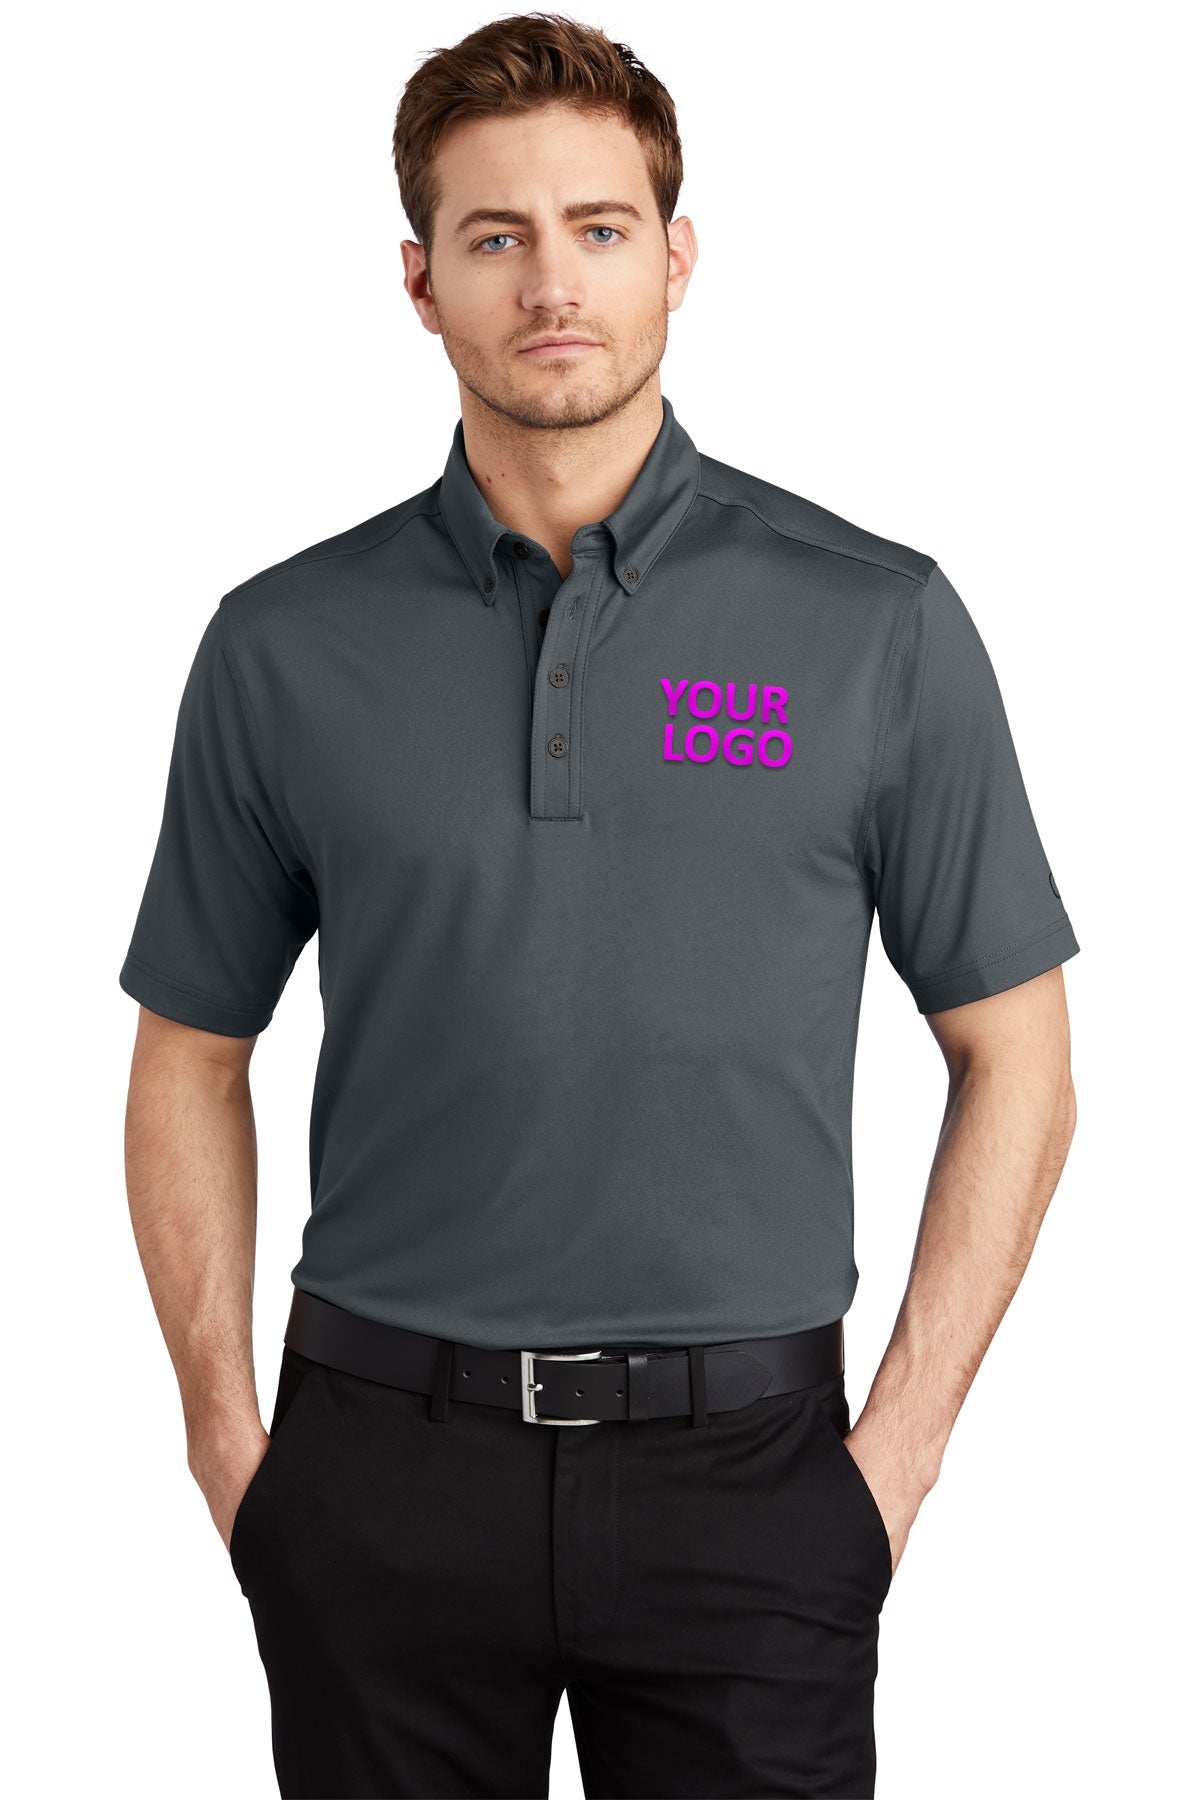 OGIO Diesel Grey OG122 work polo shirts with logo